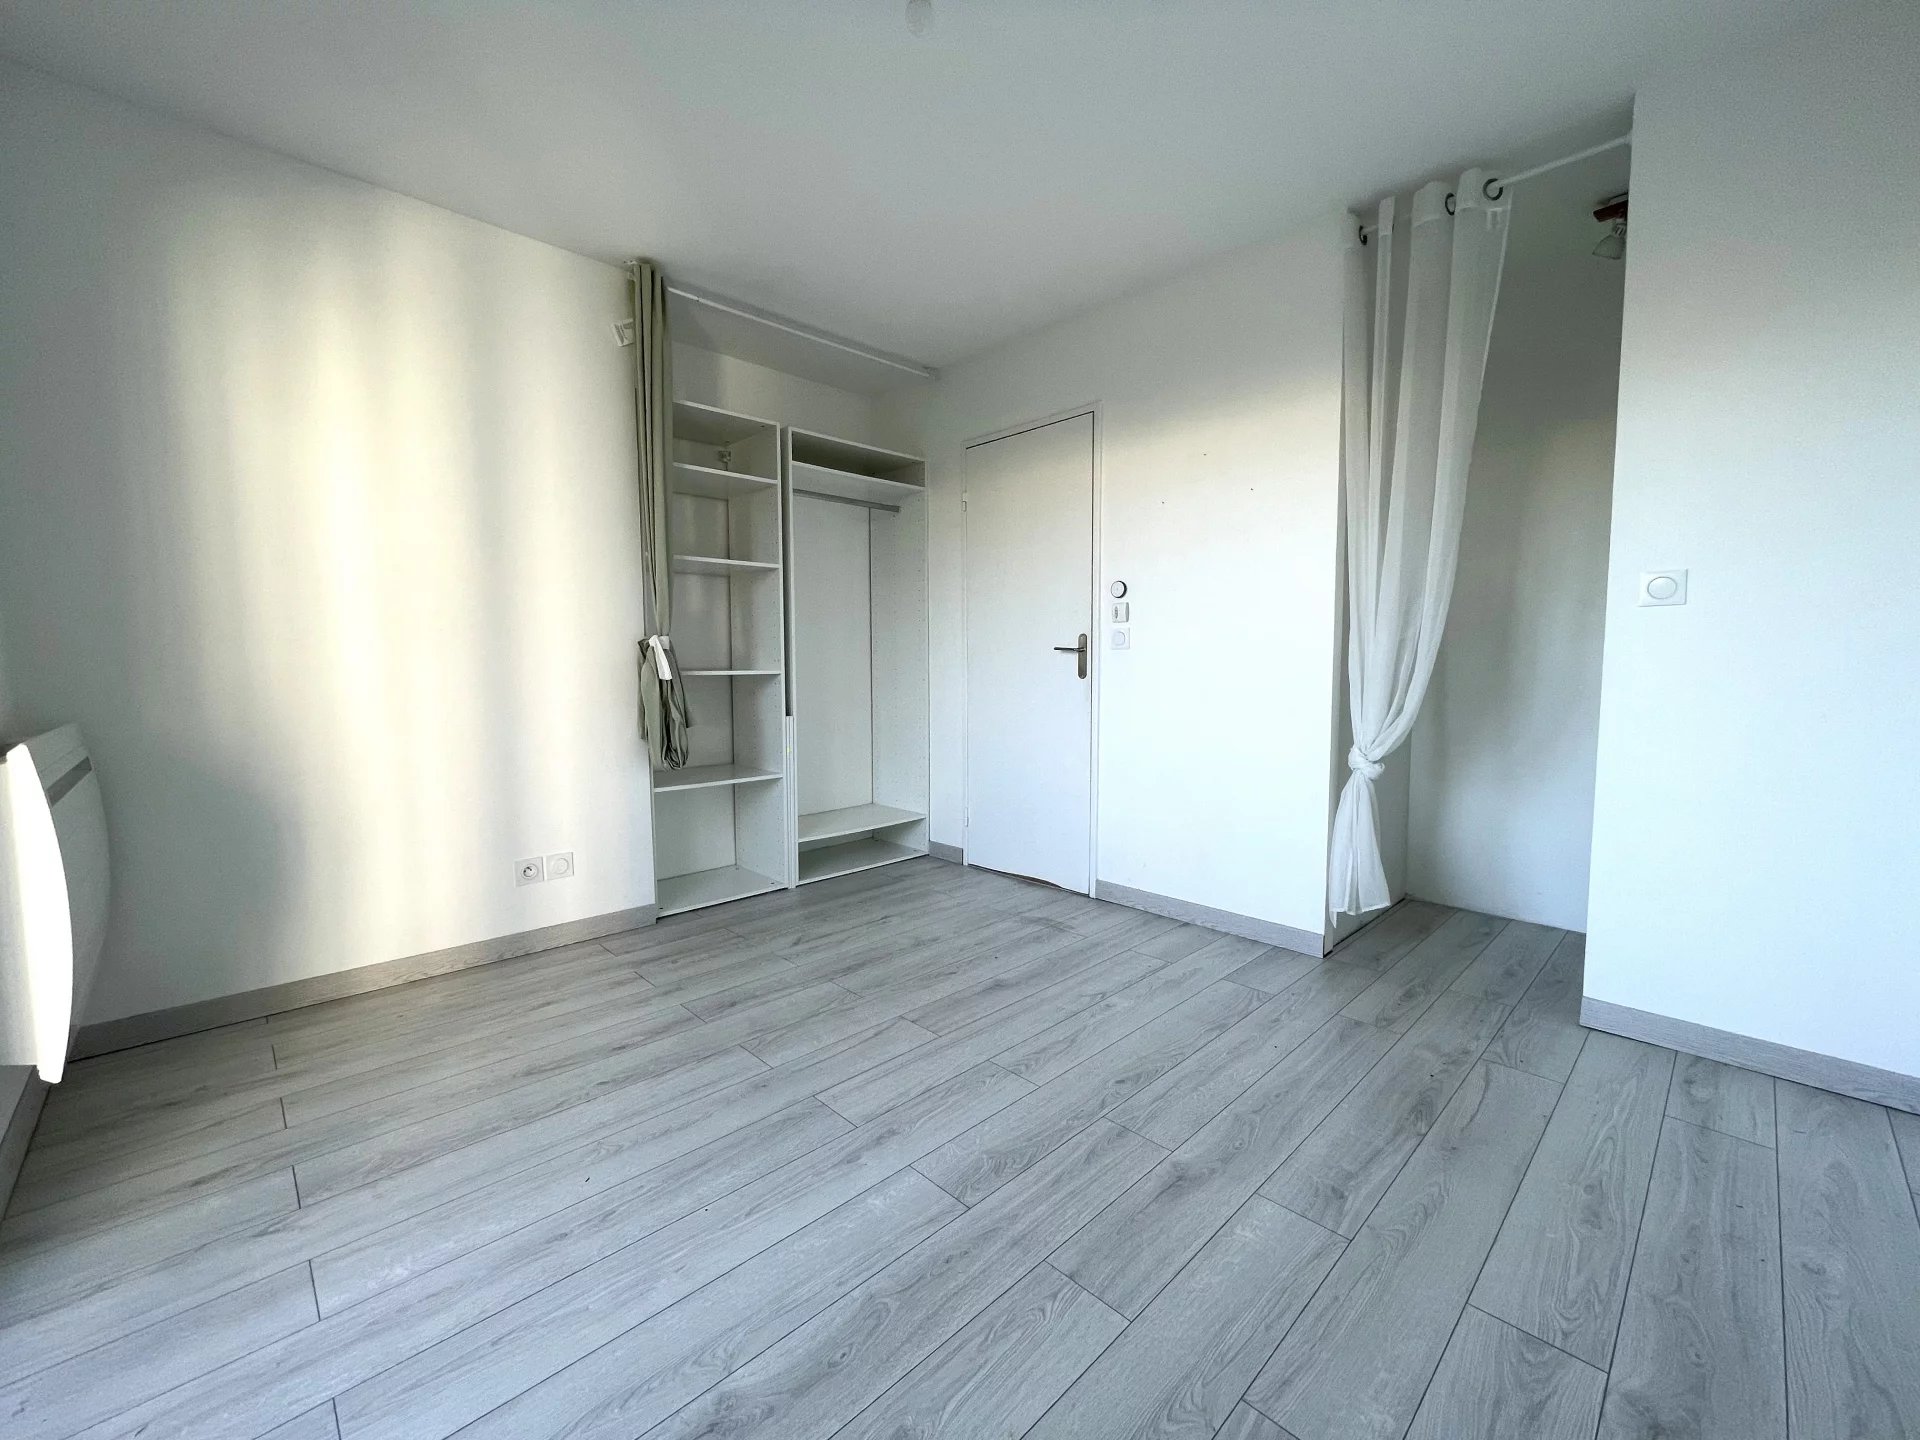 Sale Apartment - Bruges